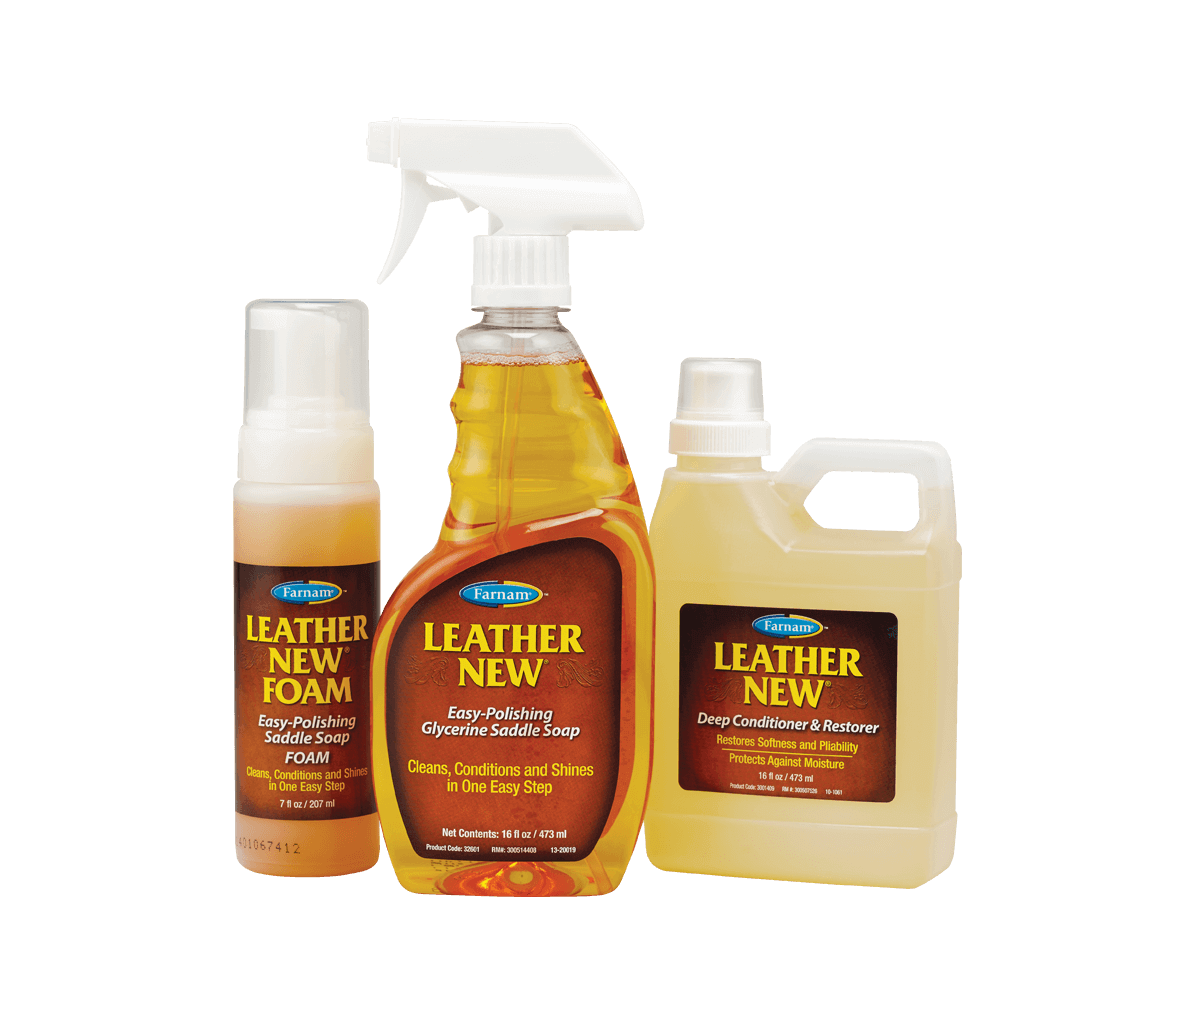 Farnam Pet Leather Saddle Soap Liquid - 32 fl oz